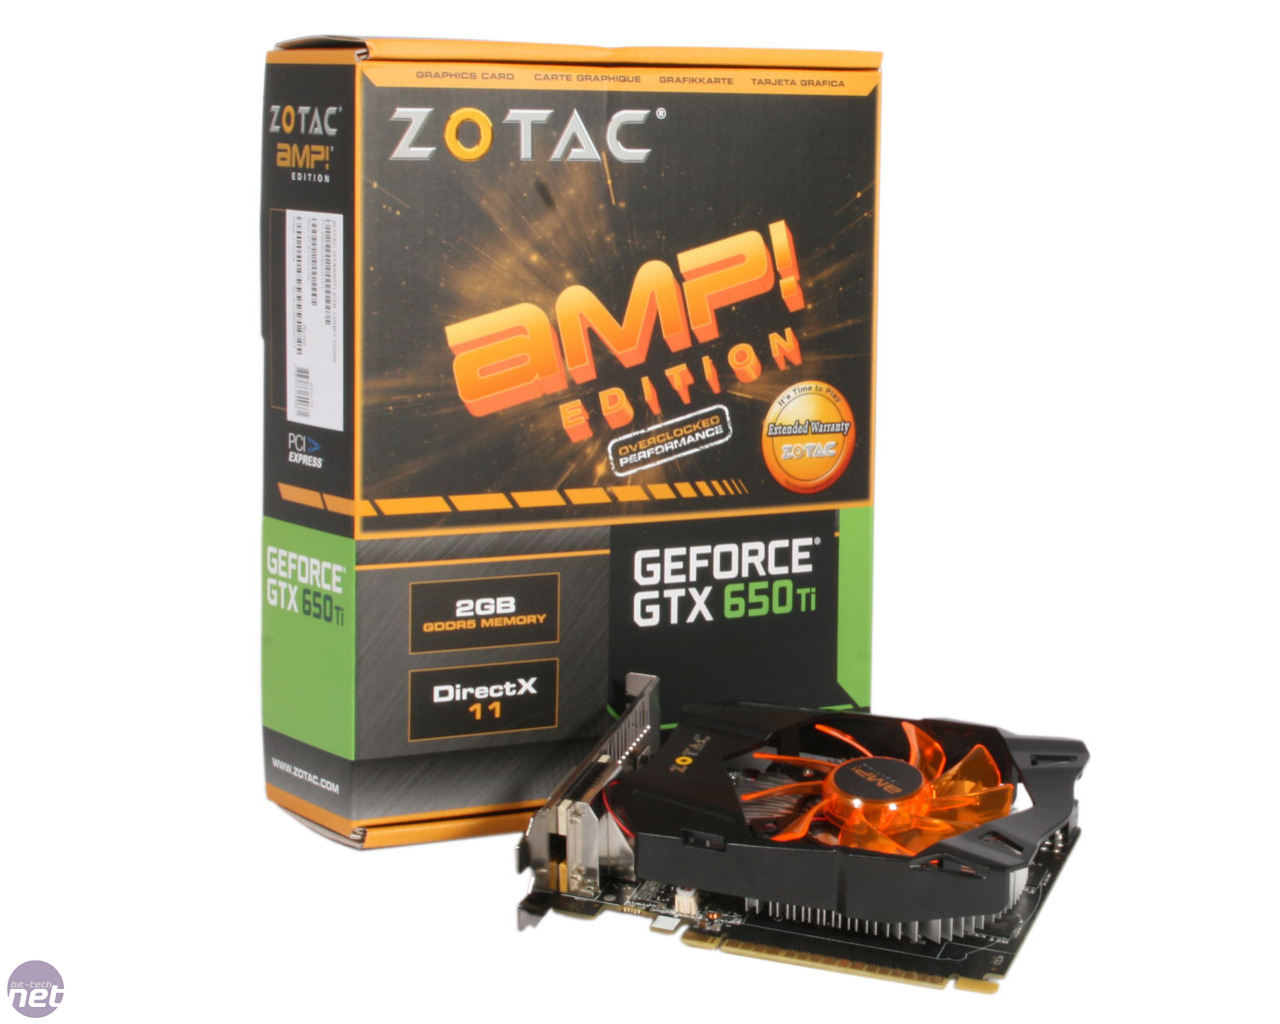 Nvidia GeForce GTX 650 Ti review | bit-tech.net